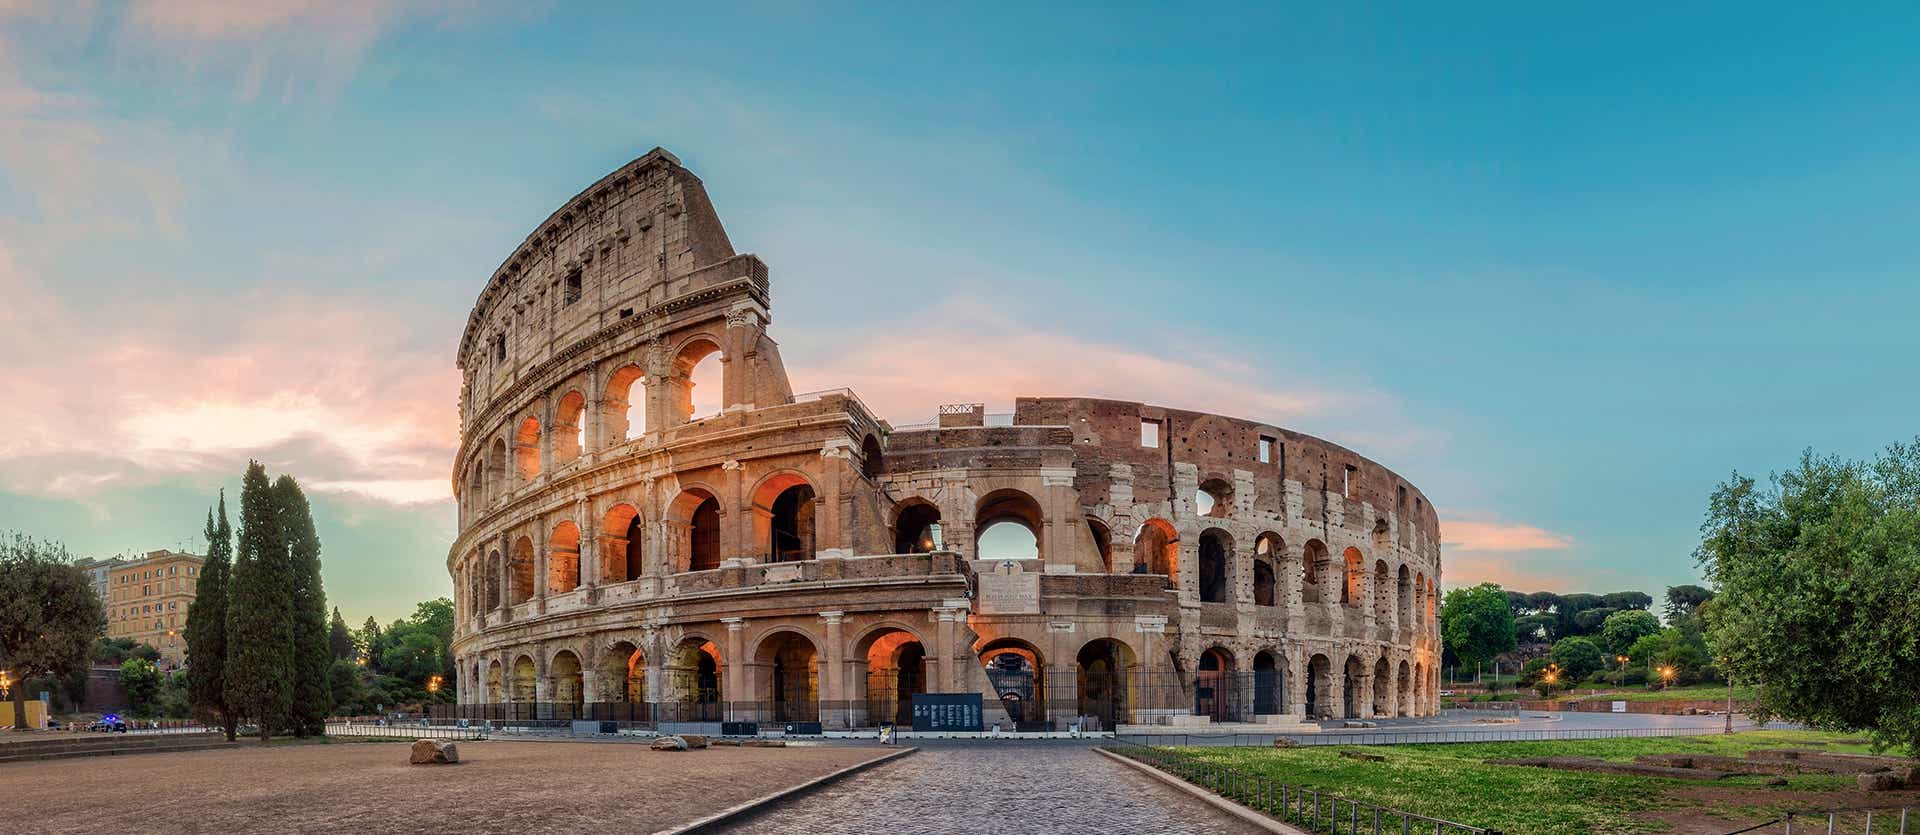 Sunset at the Colosseum <span class="iconos separador"></span> Rome 